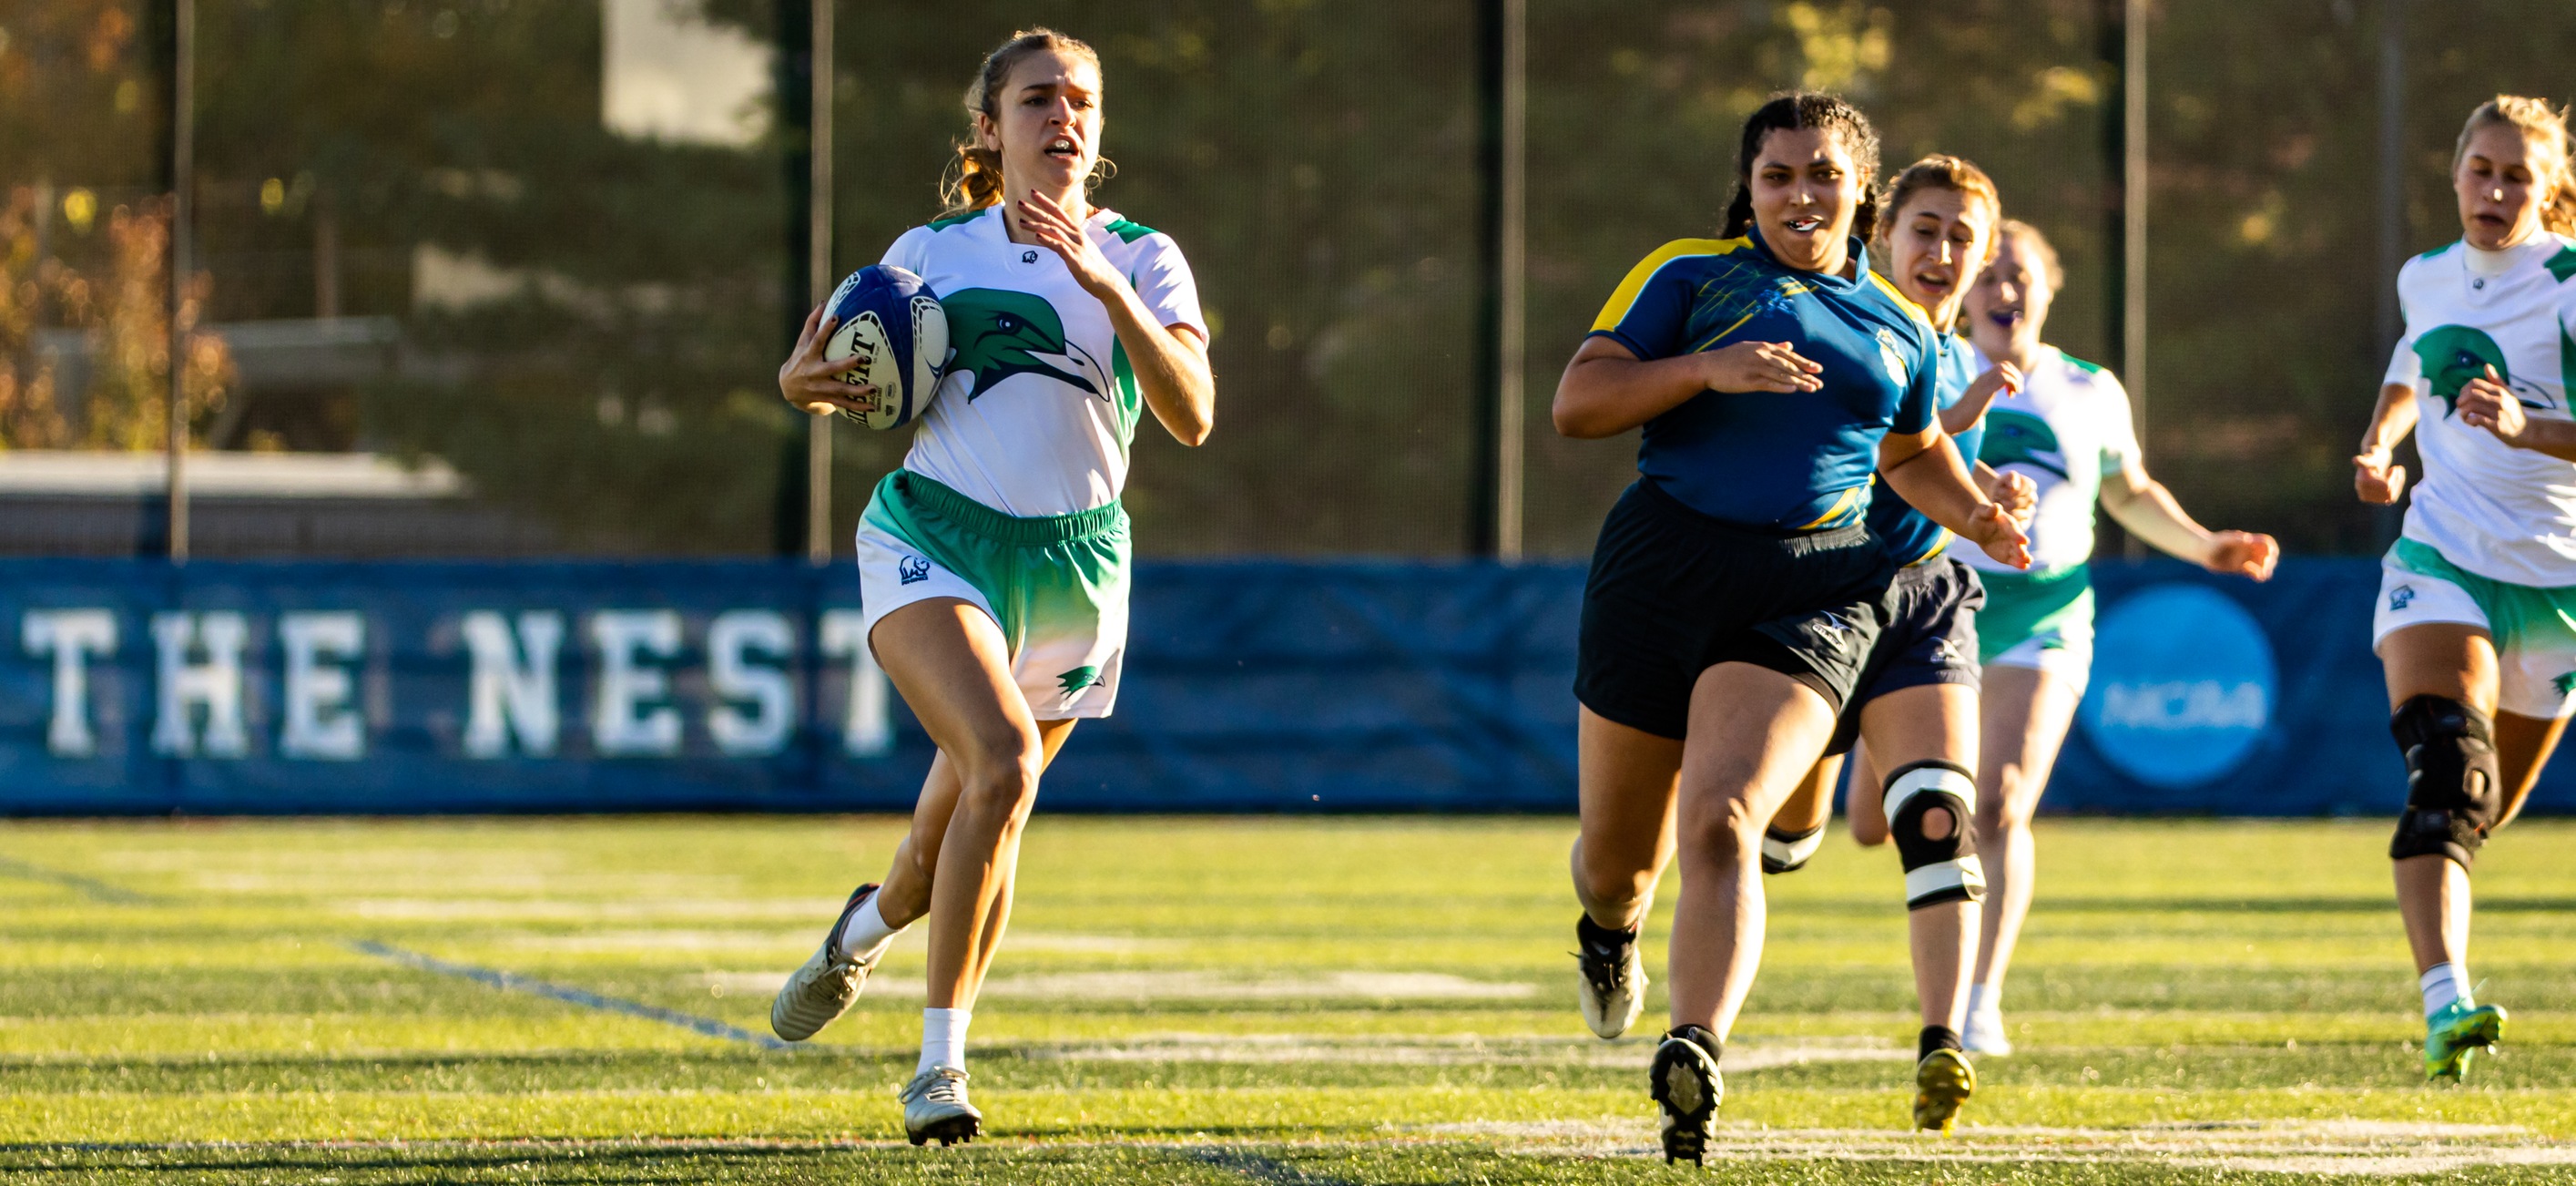 No. 2 Women’s Rugby Downs UMass Dartmouth, 59-0